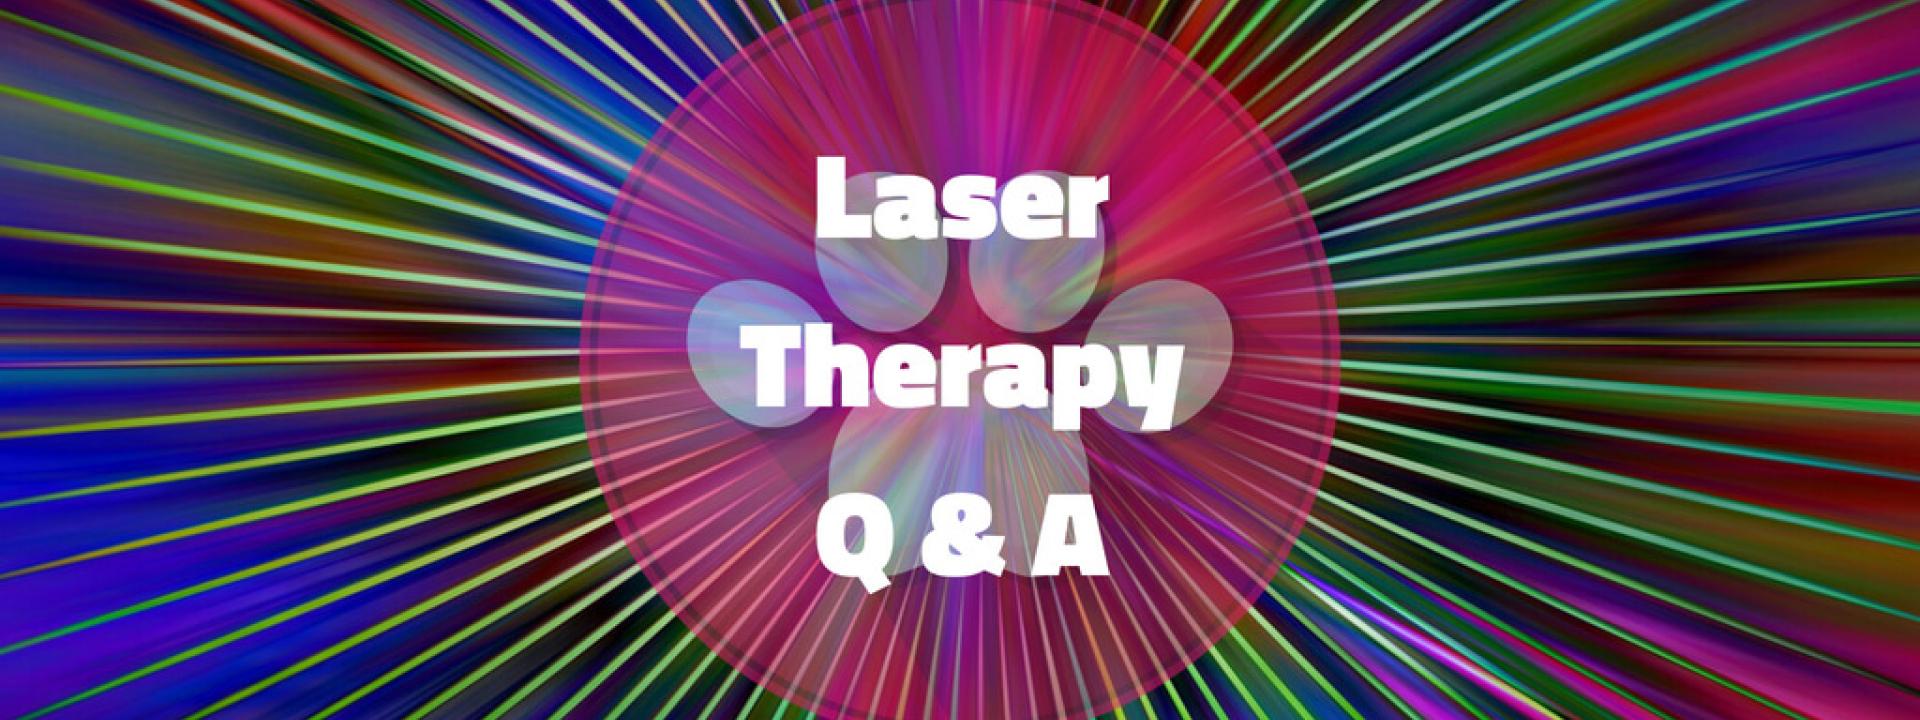 laser-therapy-Blog-Header.jpg